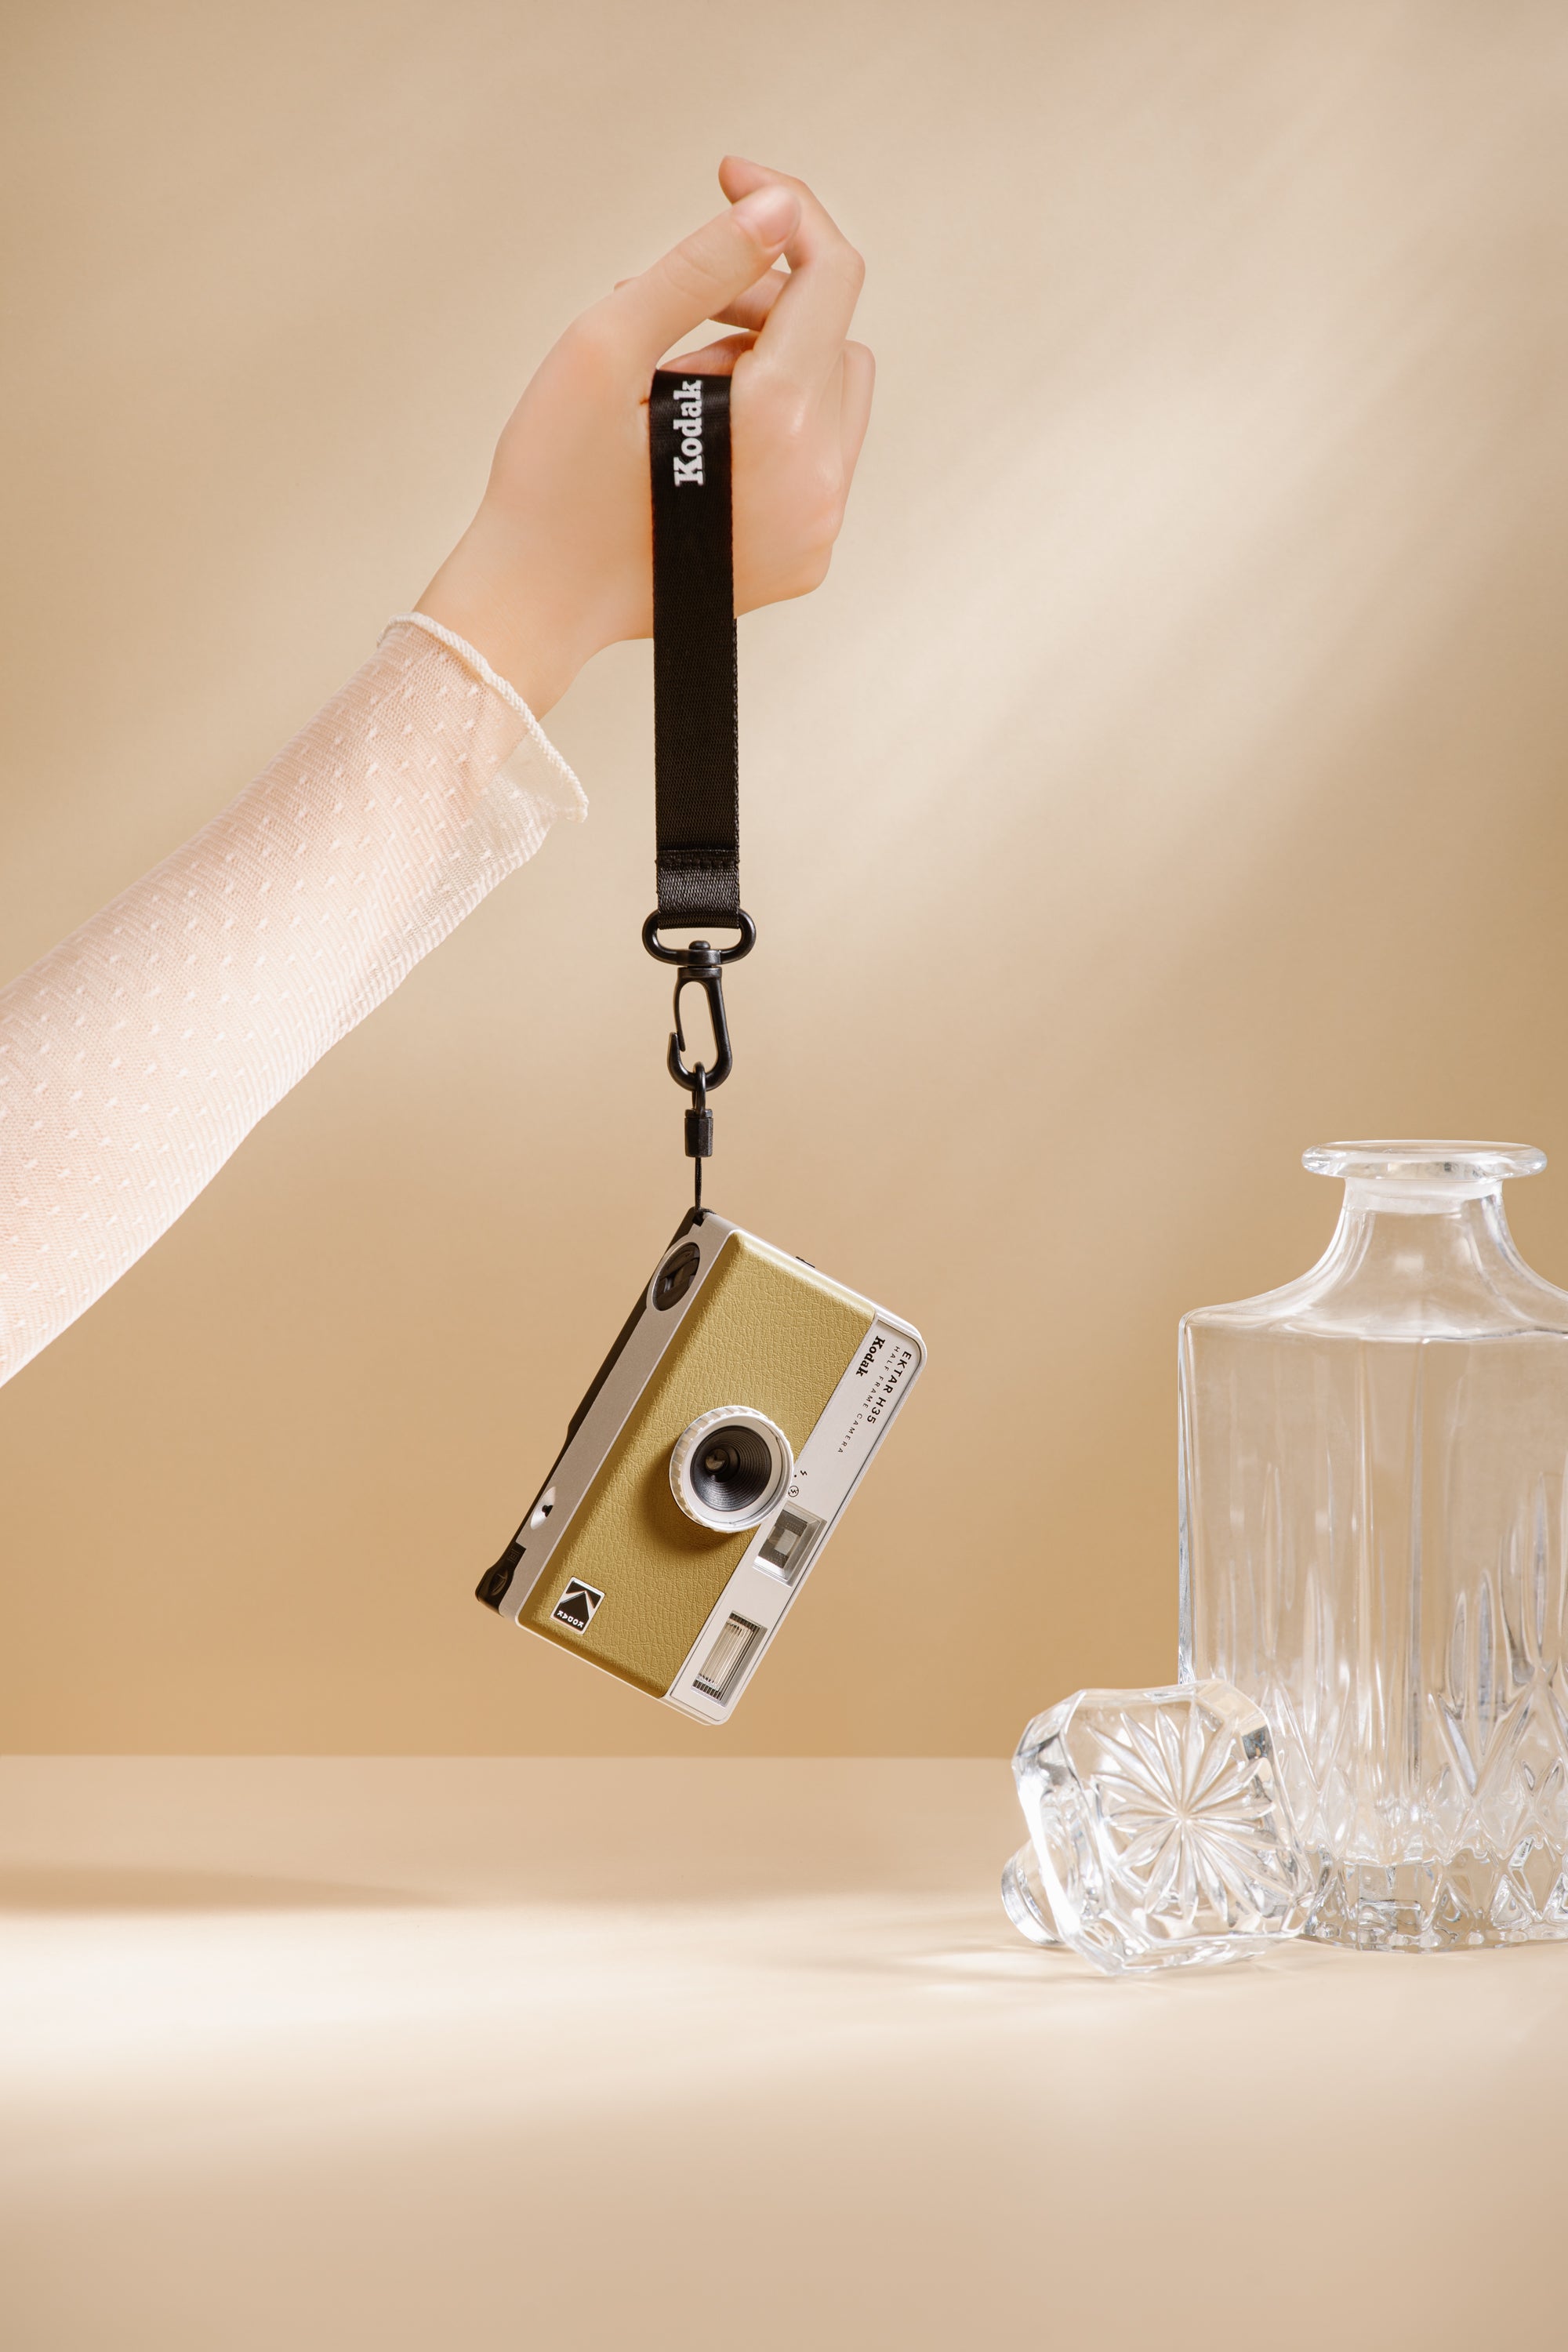 Kodak Funsaver — Glass Key Photo